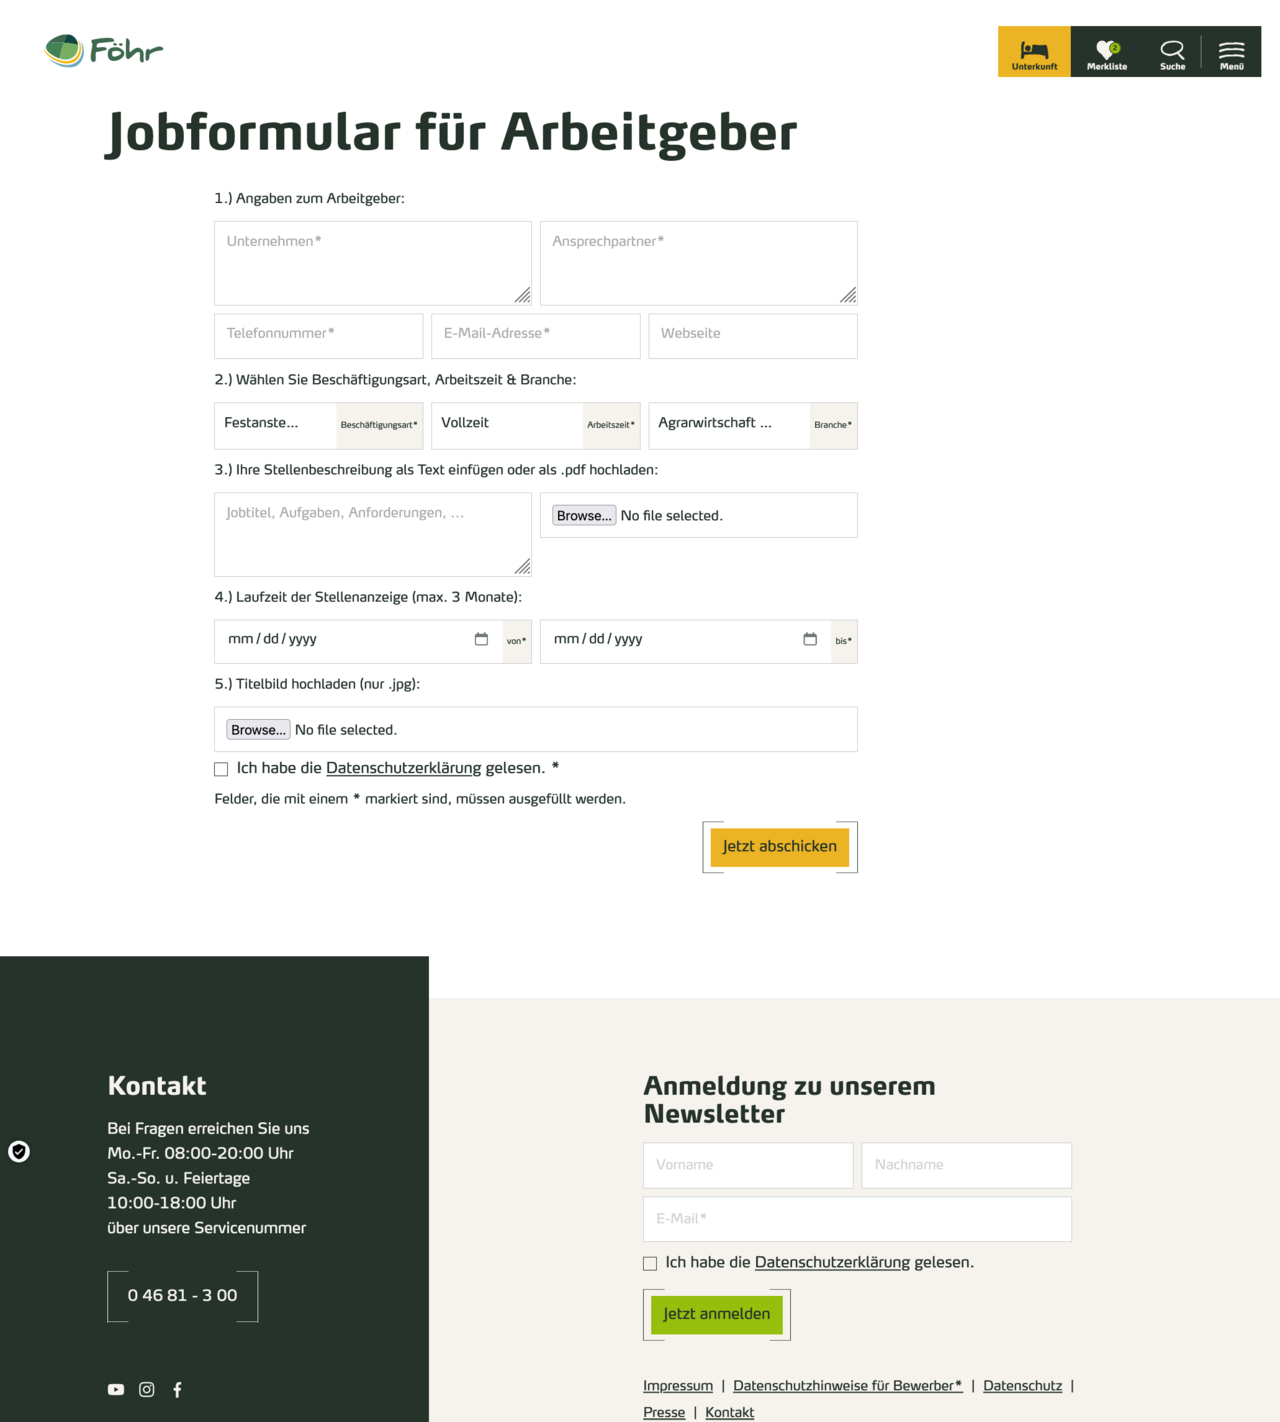 Jobformular von Föhr